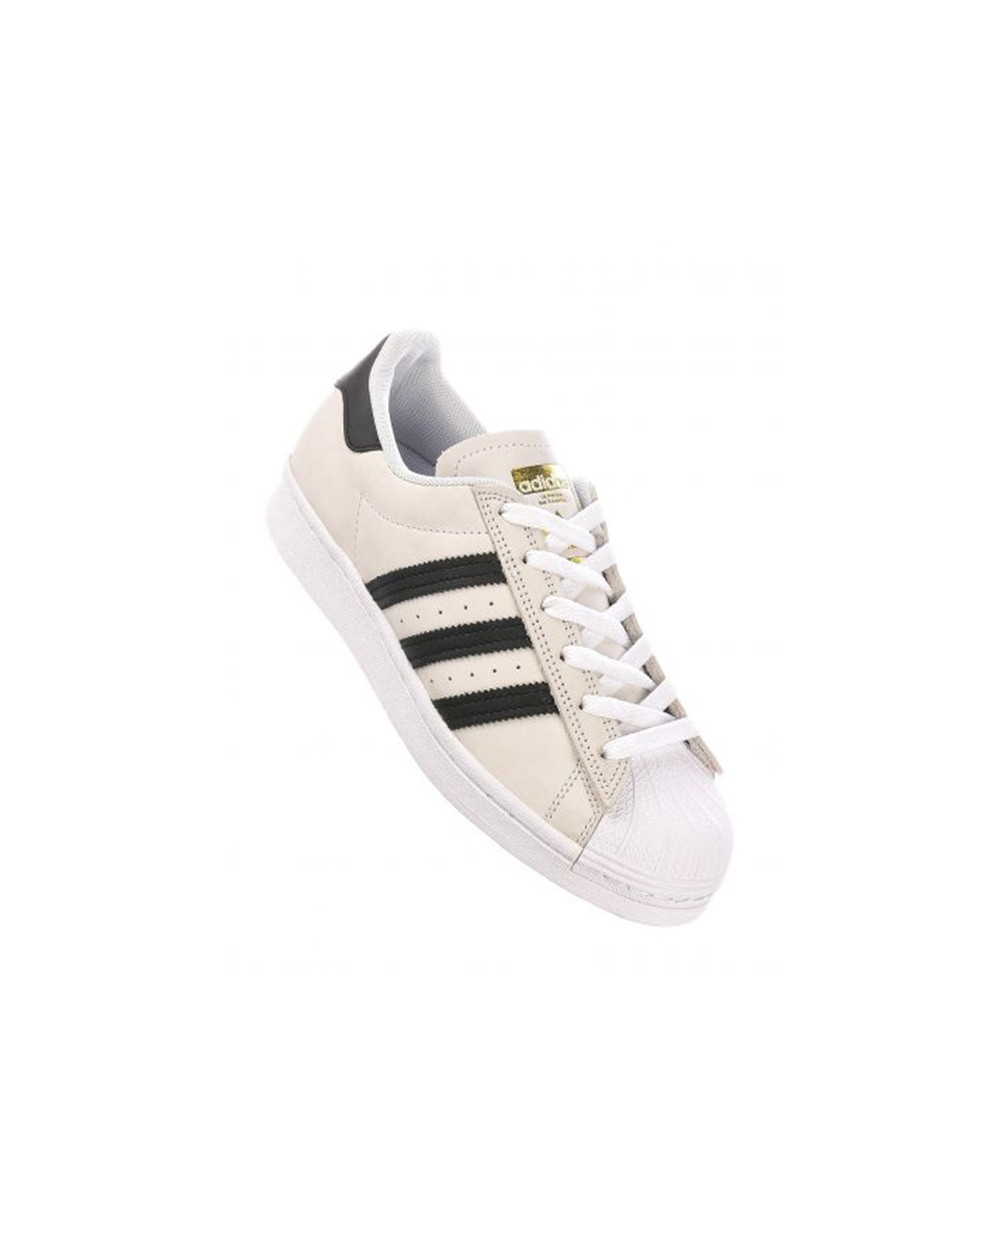 Adidas Superstar ADV CBlck/GoldMT Sneakers